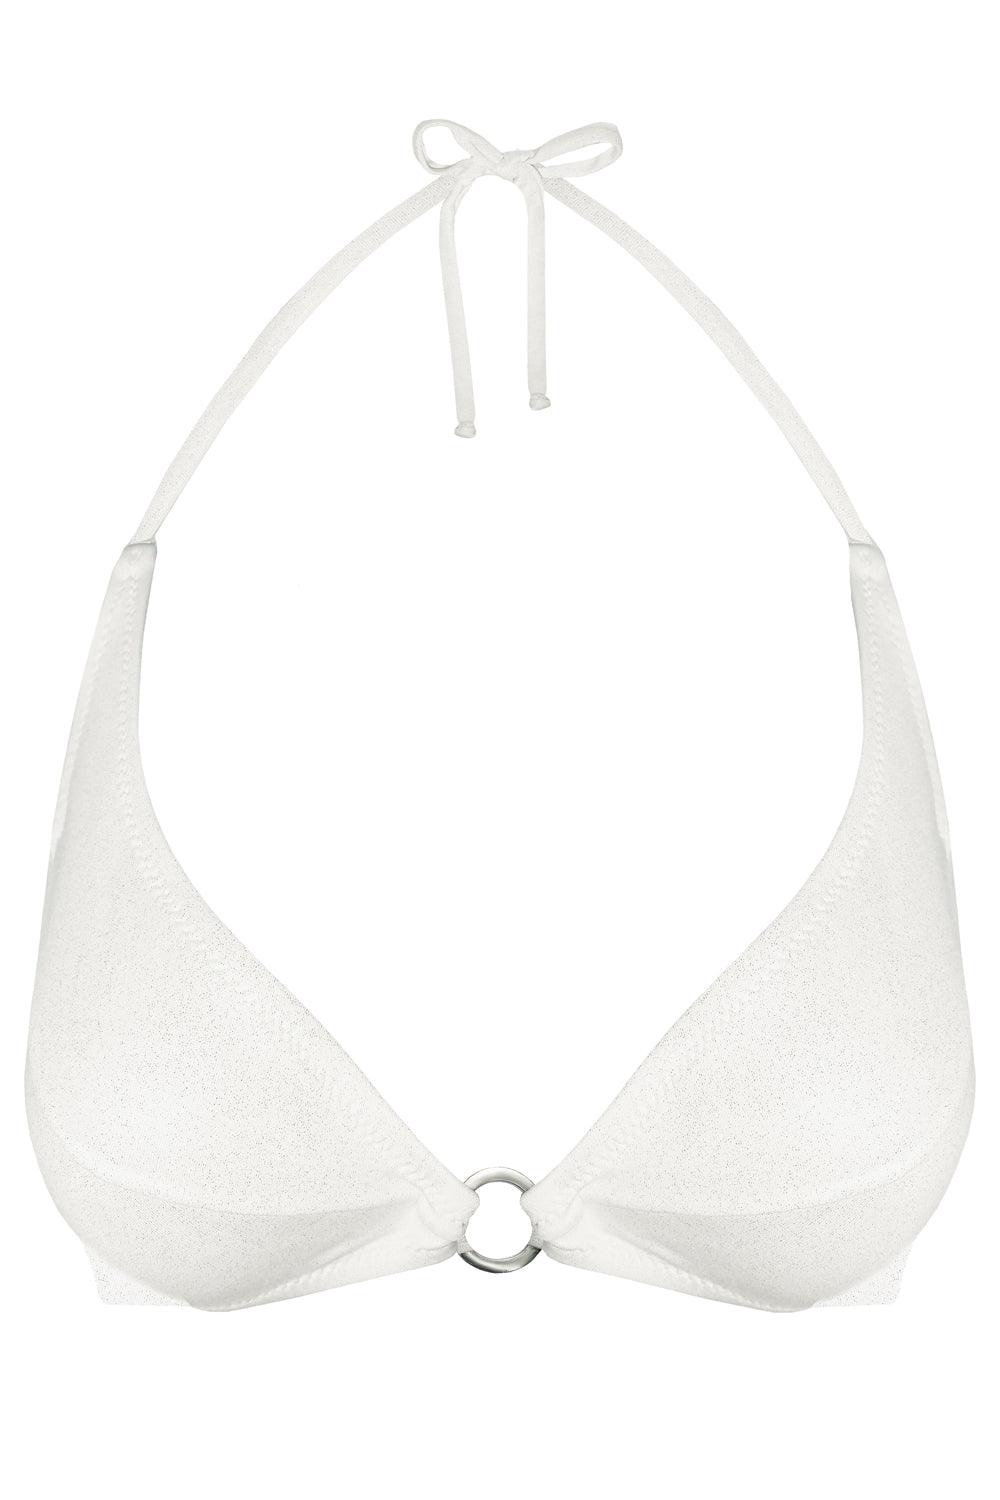 Titaniya Silver Ivory bikini top - Bikini top by yesUndress. Shop on yesUndress